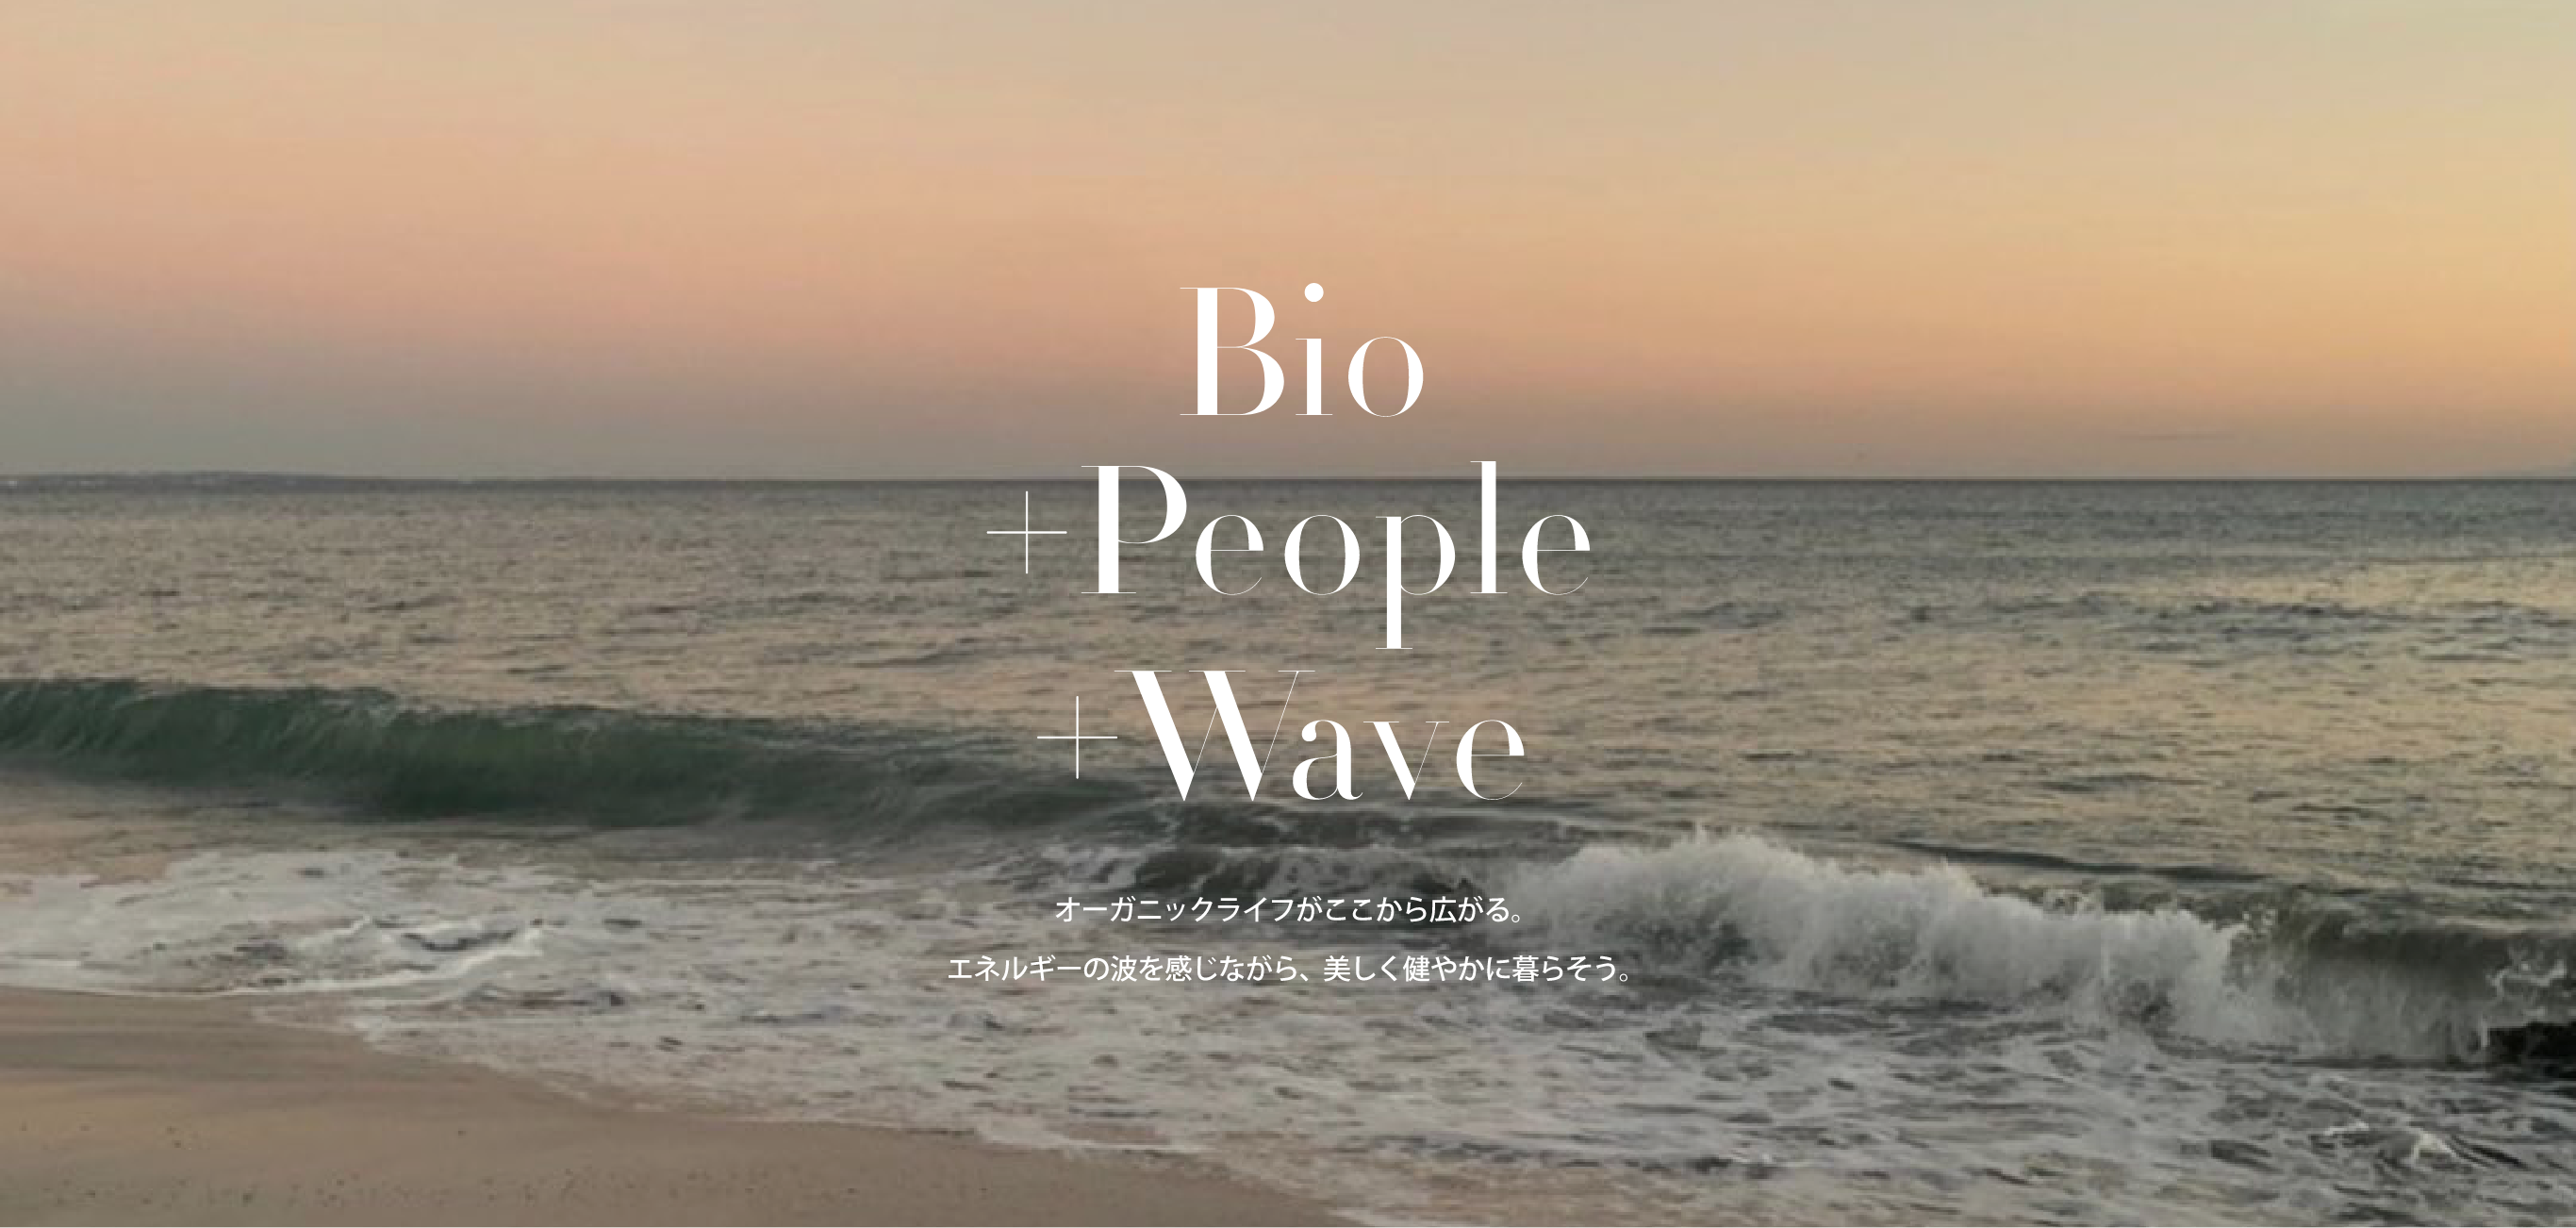 Bio People Wave